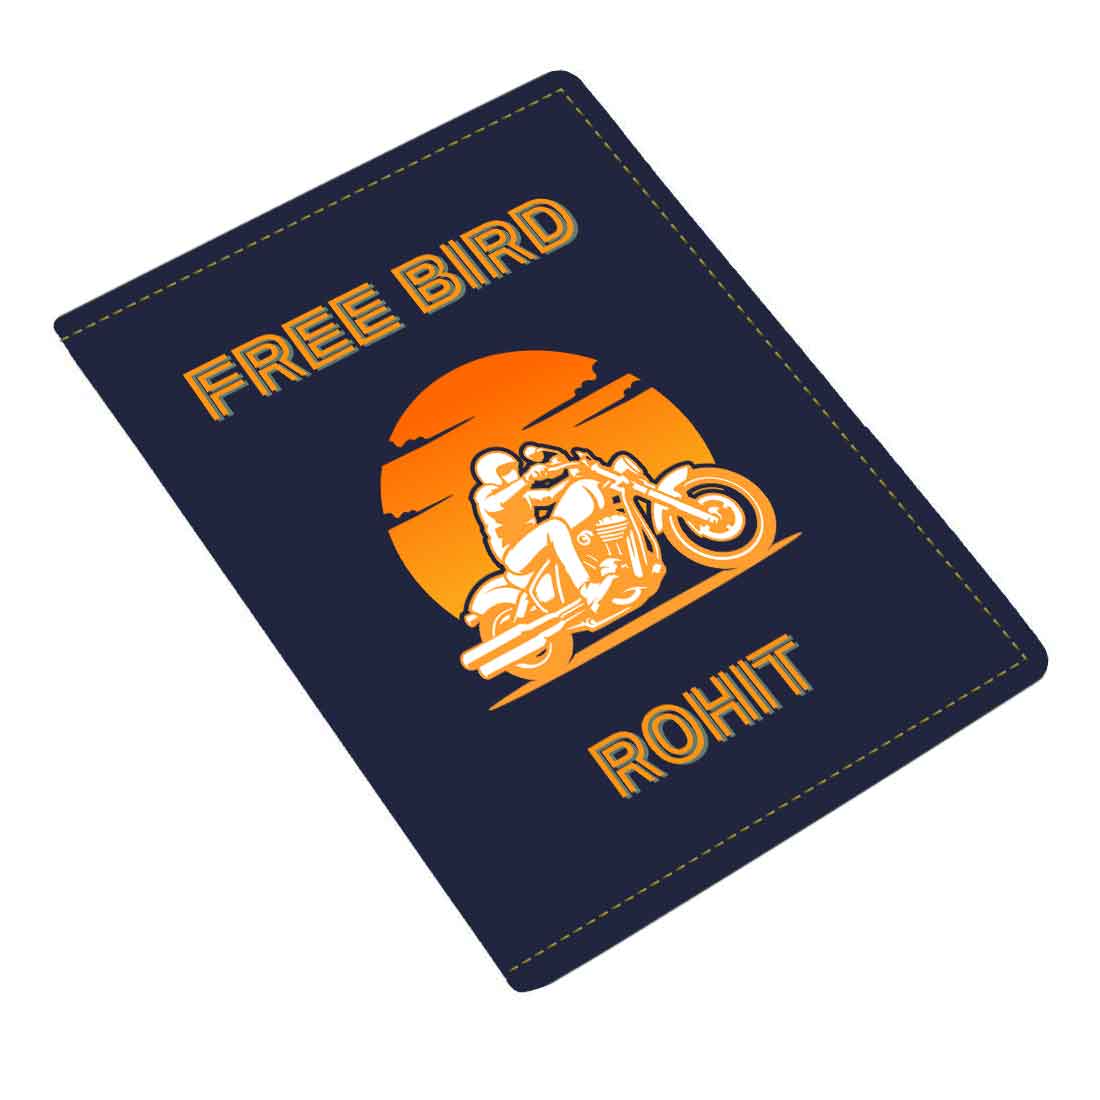 Passport Cover for Men Vegan Leather Custom Cases for Passports - Free Bird